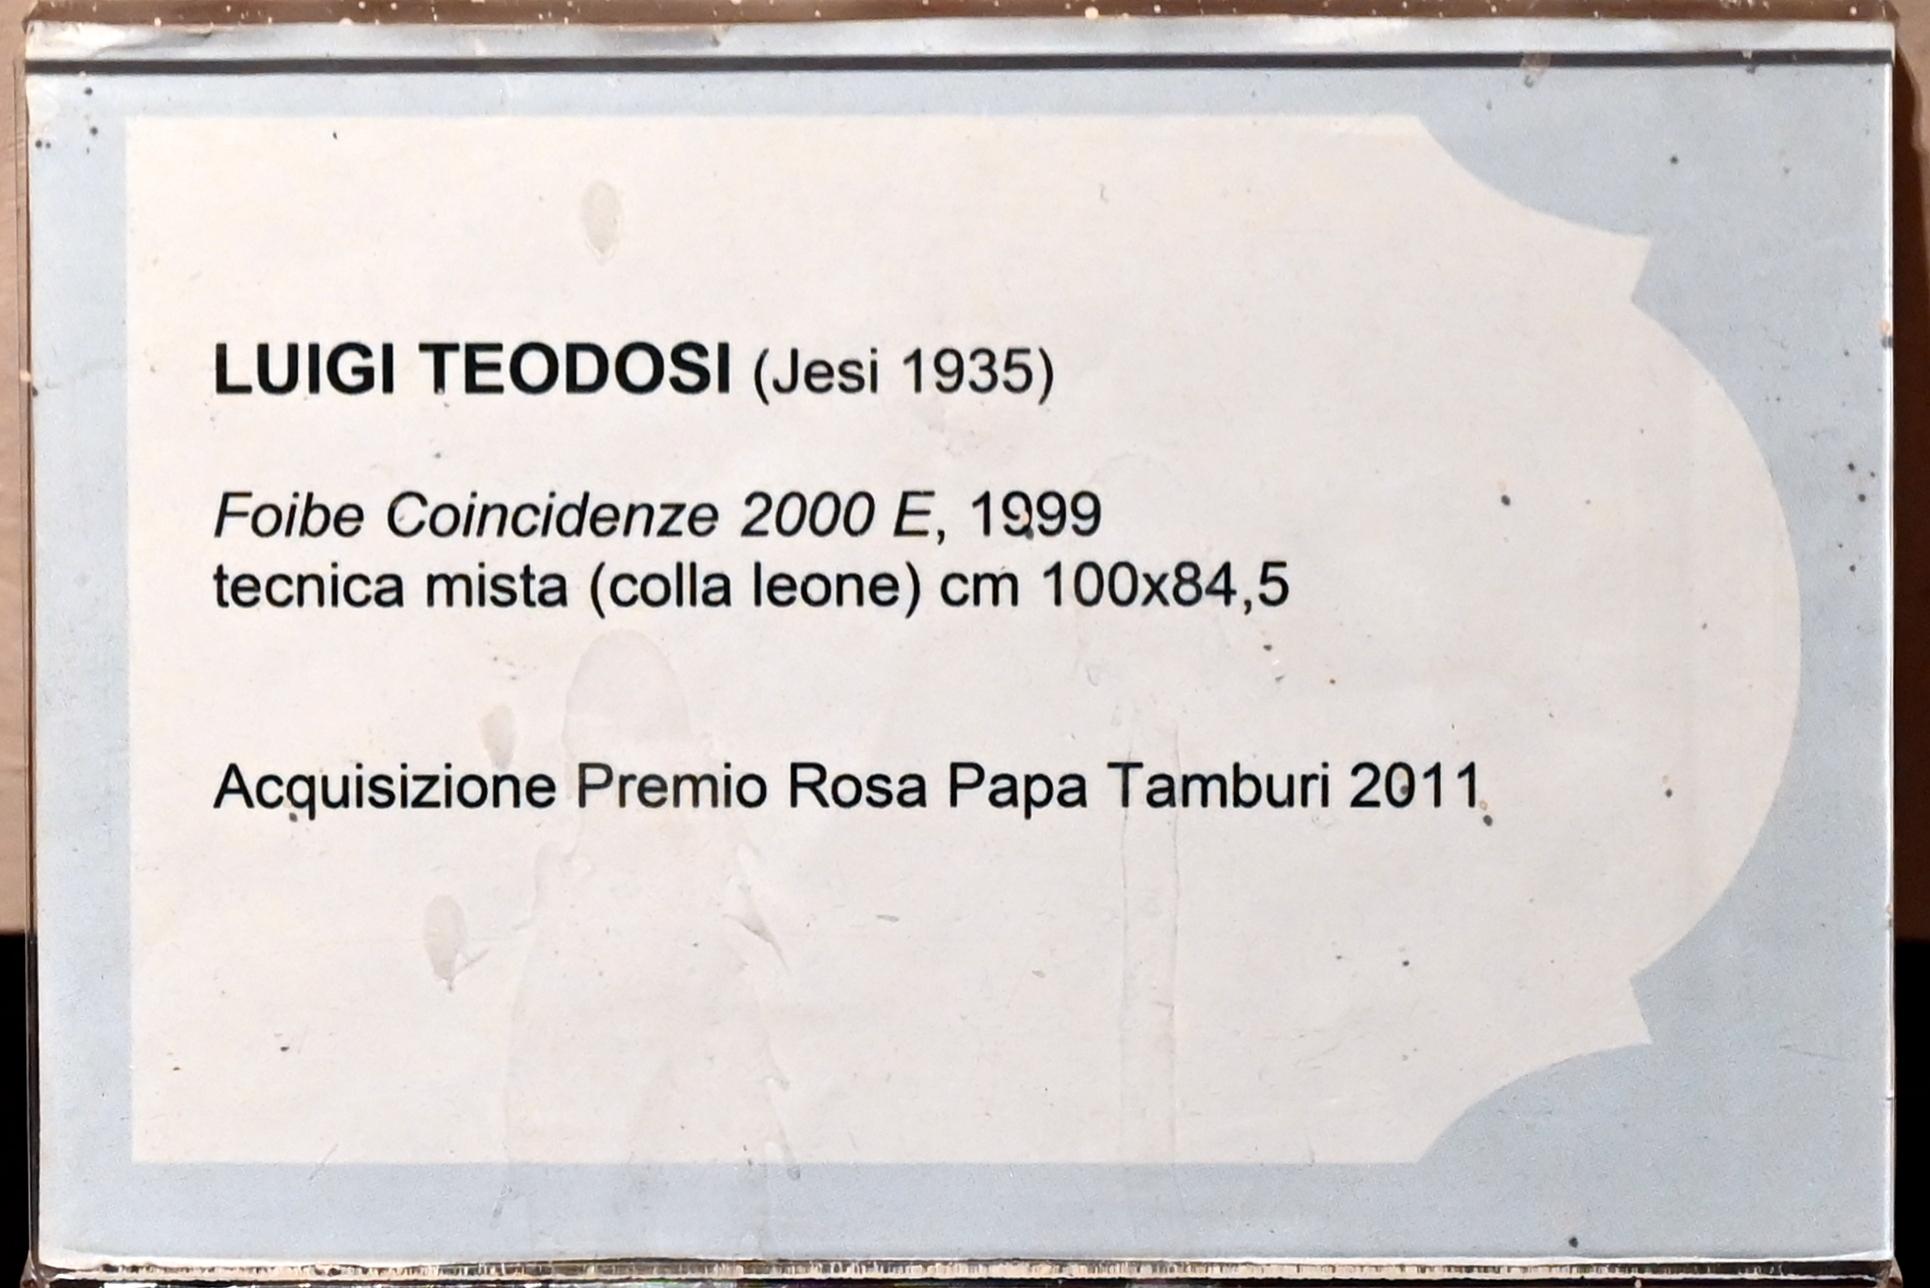 Luigi Teodosi (1999), Foibe Übereinstimmungen 2000 E, Jesi, Städtische Kunstgalerie, Obergeschoss Saal 5, 1999, Bild 2/2